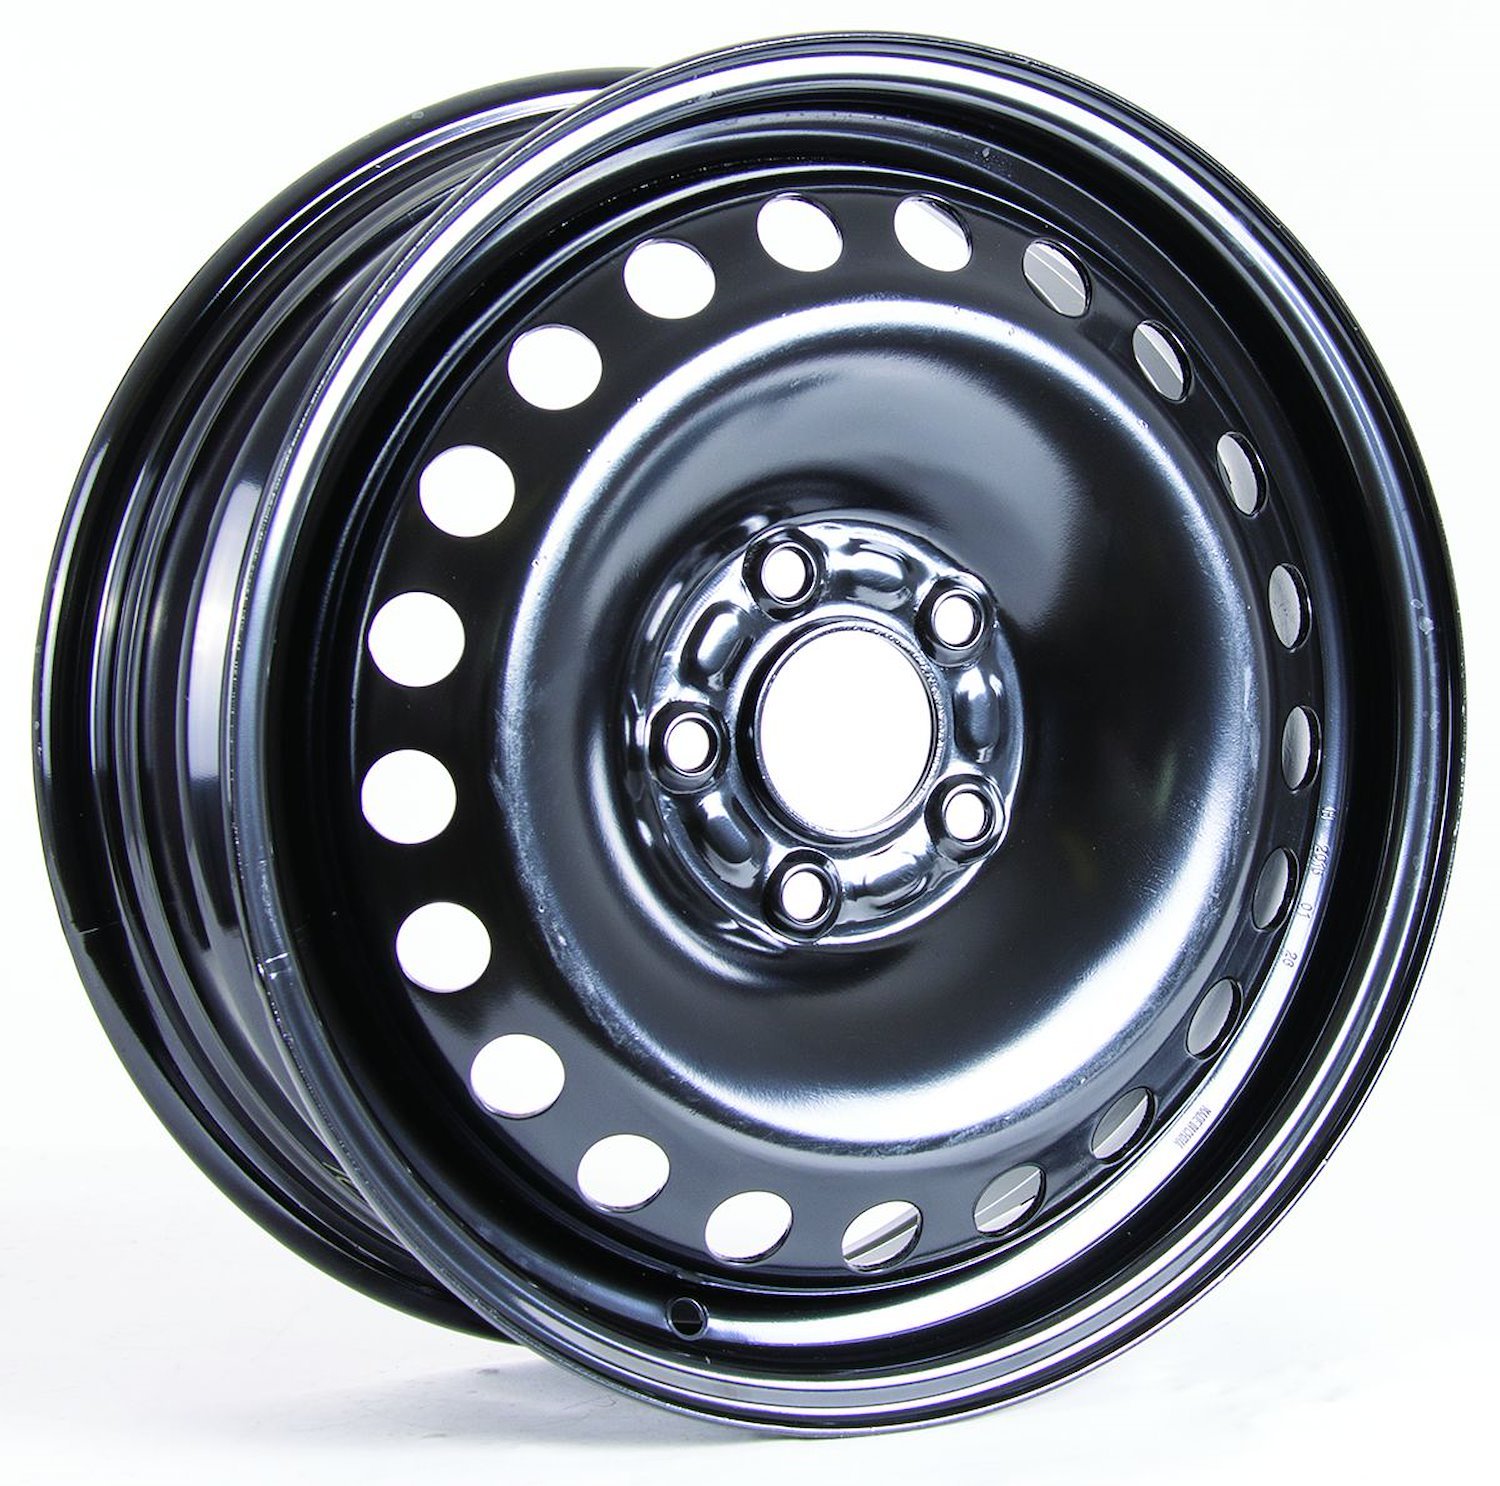 X40838 Steel Wheel [Size: 16" x 6"] Black Finish